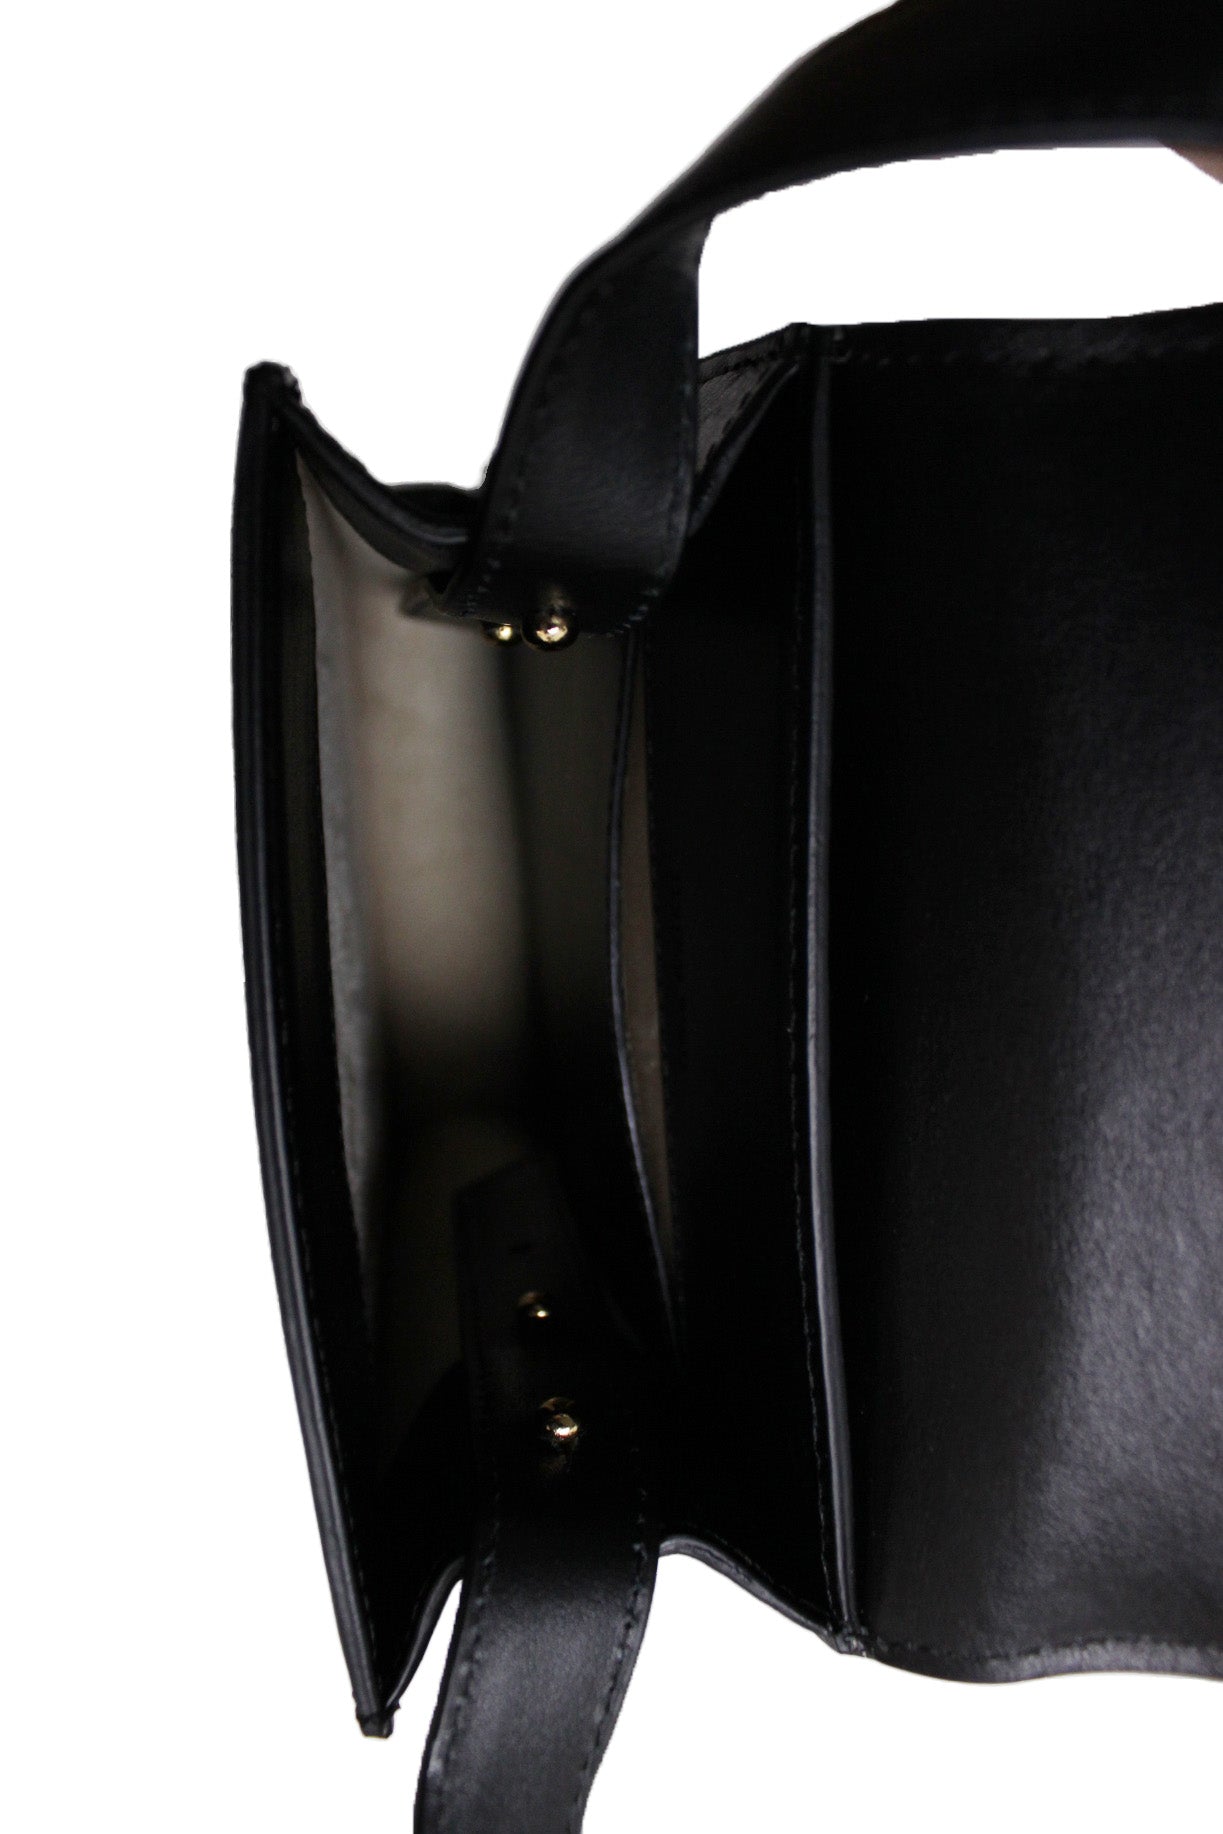 inside of leather purse. small slit inner pocket. 